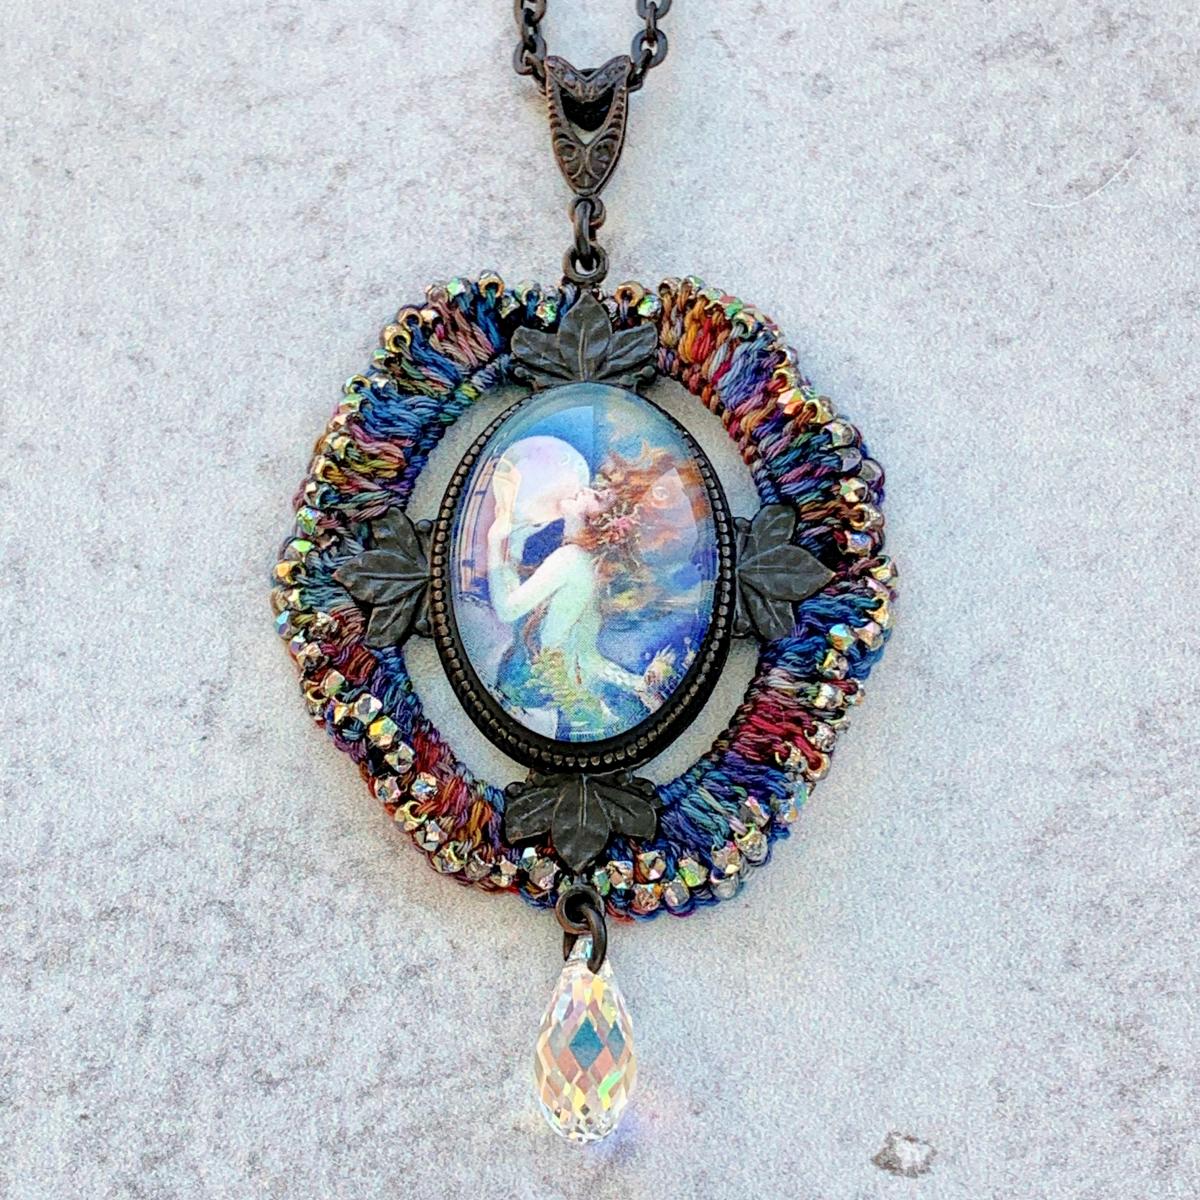 Vintage Mermaid Photo Cabochon Glass Brass Chain Locket Pendant Necklace